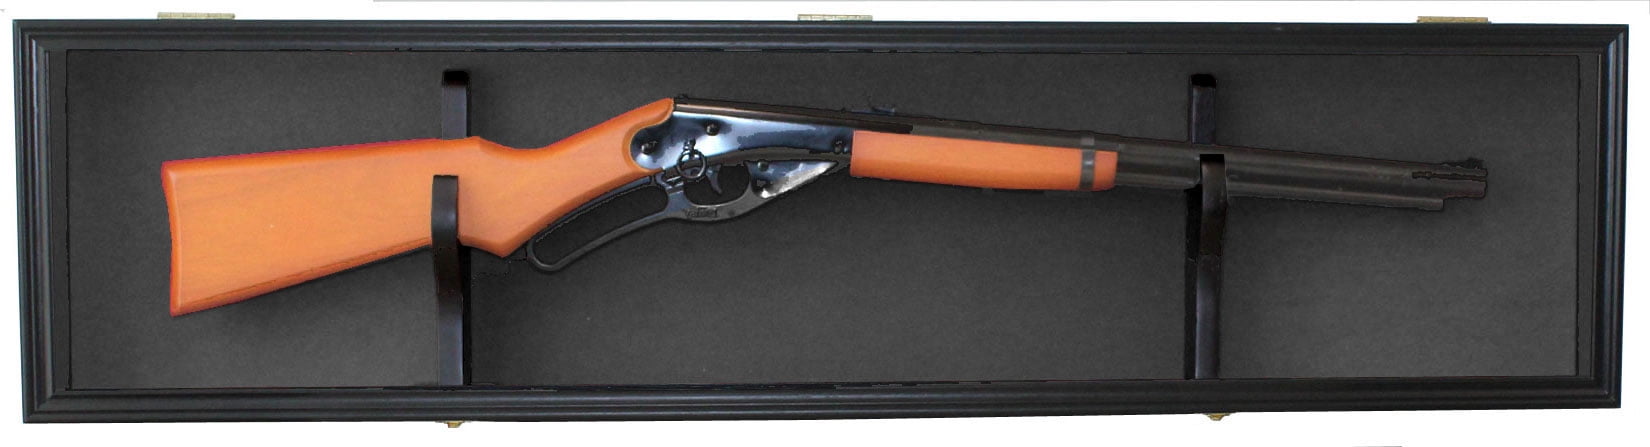 Gun Trophy Cabinet Locking Display Case How-To Build PLANS 5 rifles 